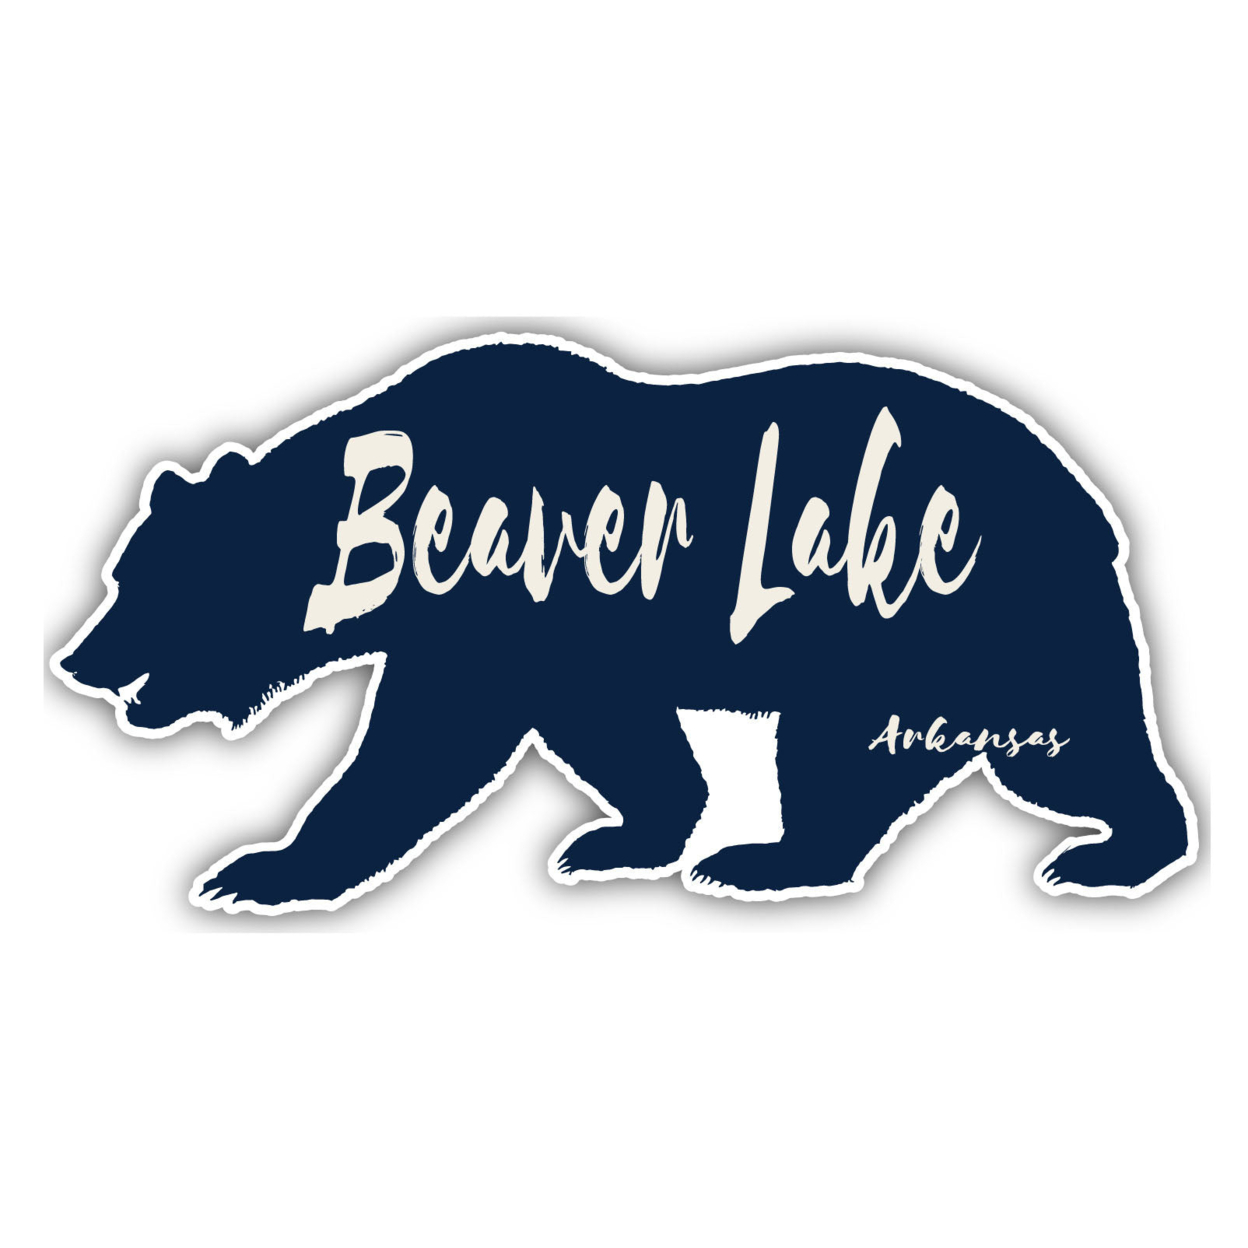 Beaver Lake Arkansas Souvenir Decorative Stickers (Choose Theme And Size) - Single Unit, 12-Inch, Adventures Awaits